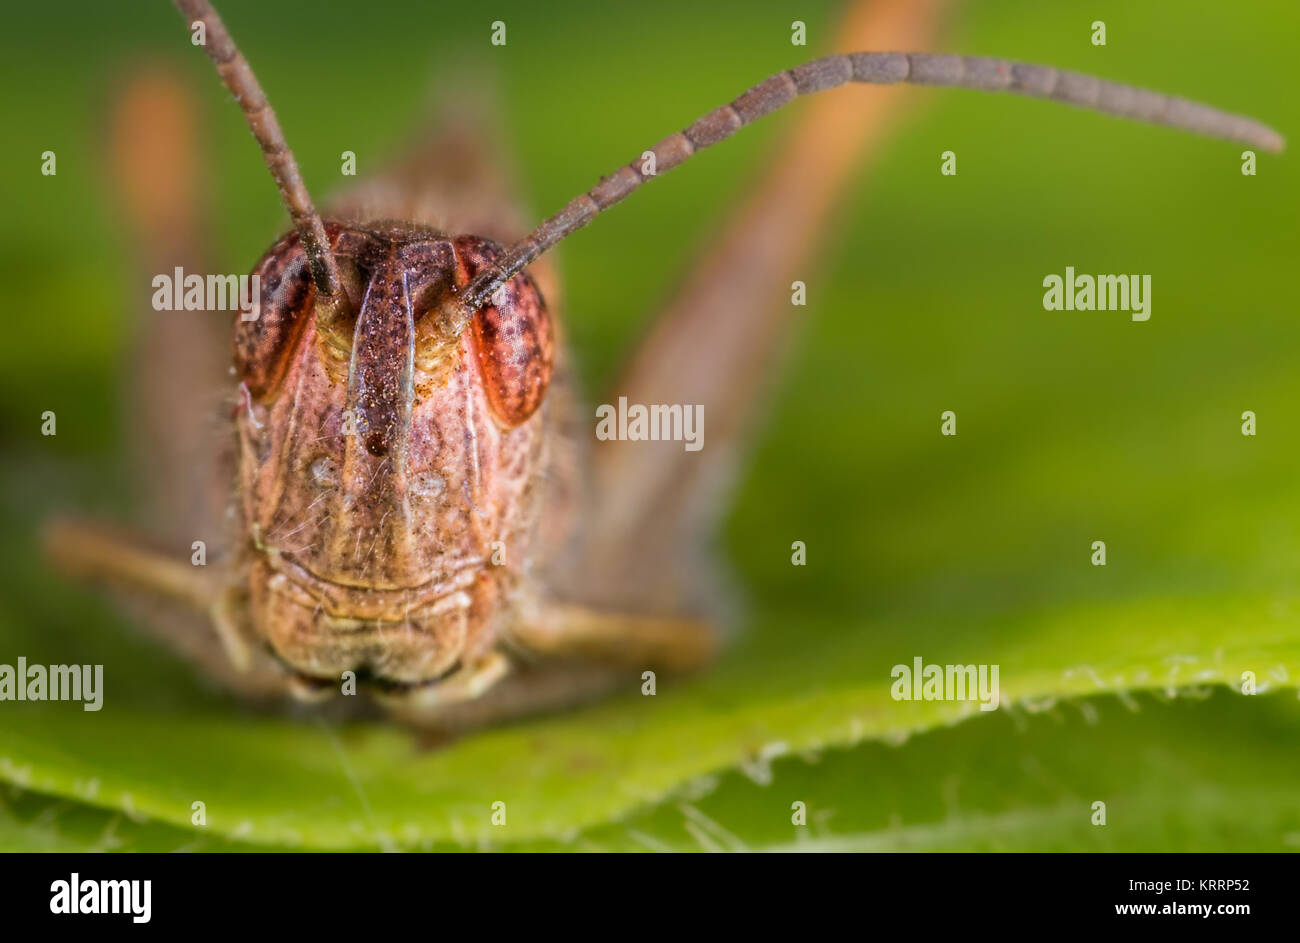 Closeup of the head of a grasshopper. Stock Photo